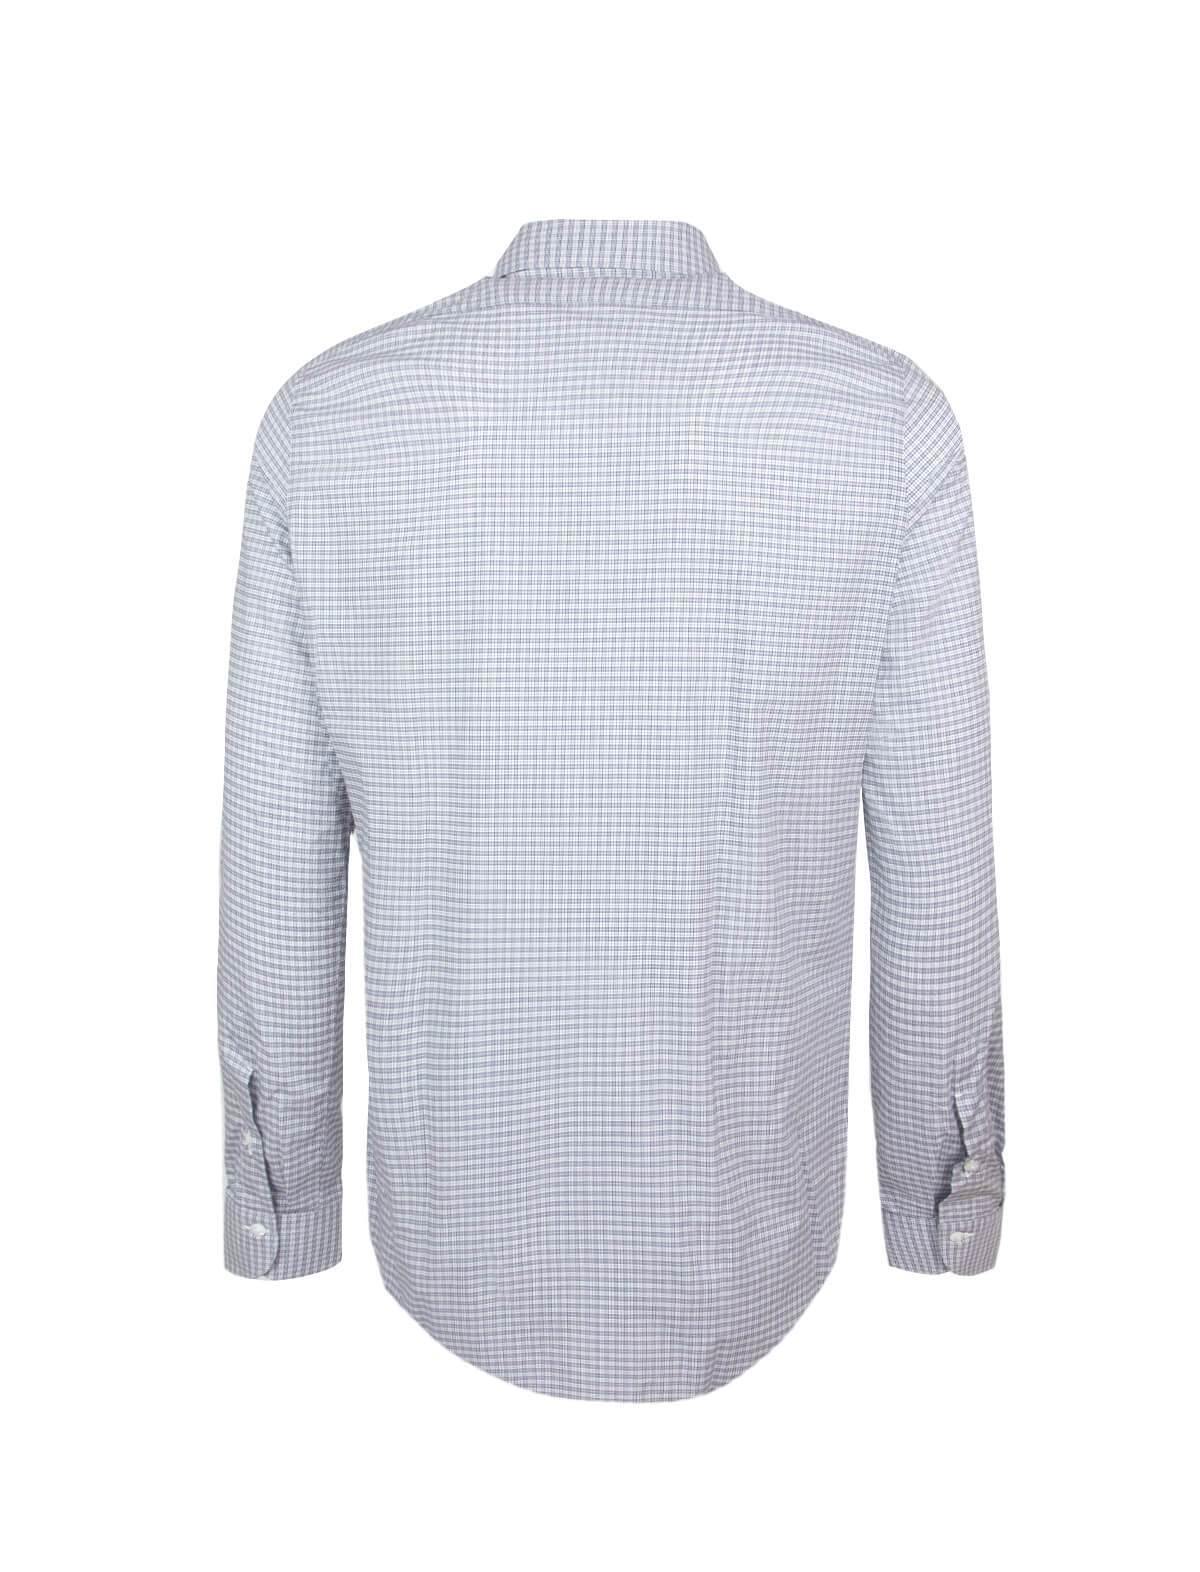 FINAMORE 1925 Milano Cotton Checked Shirt in White/ Blue | CLOSET Singapore